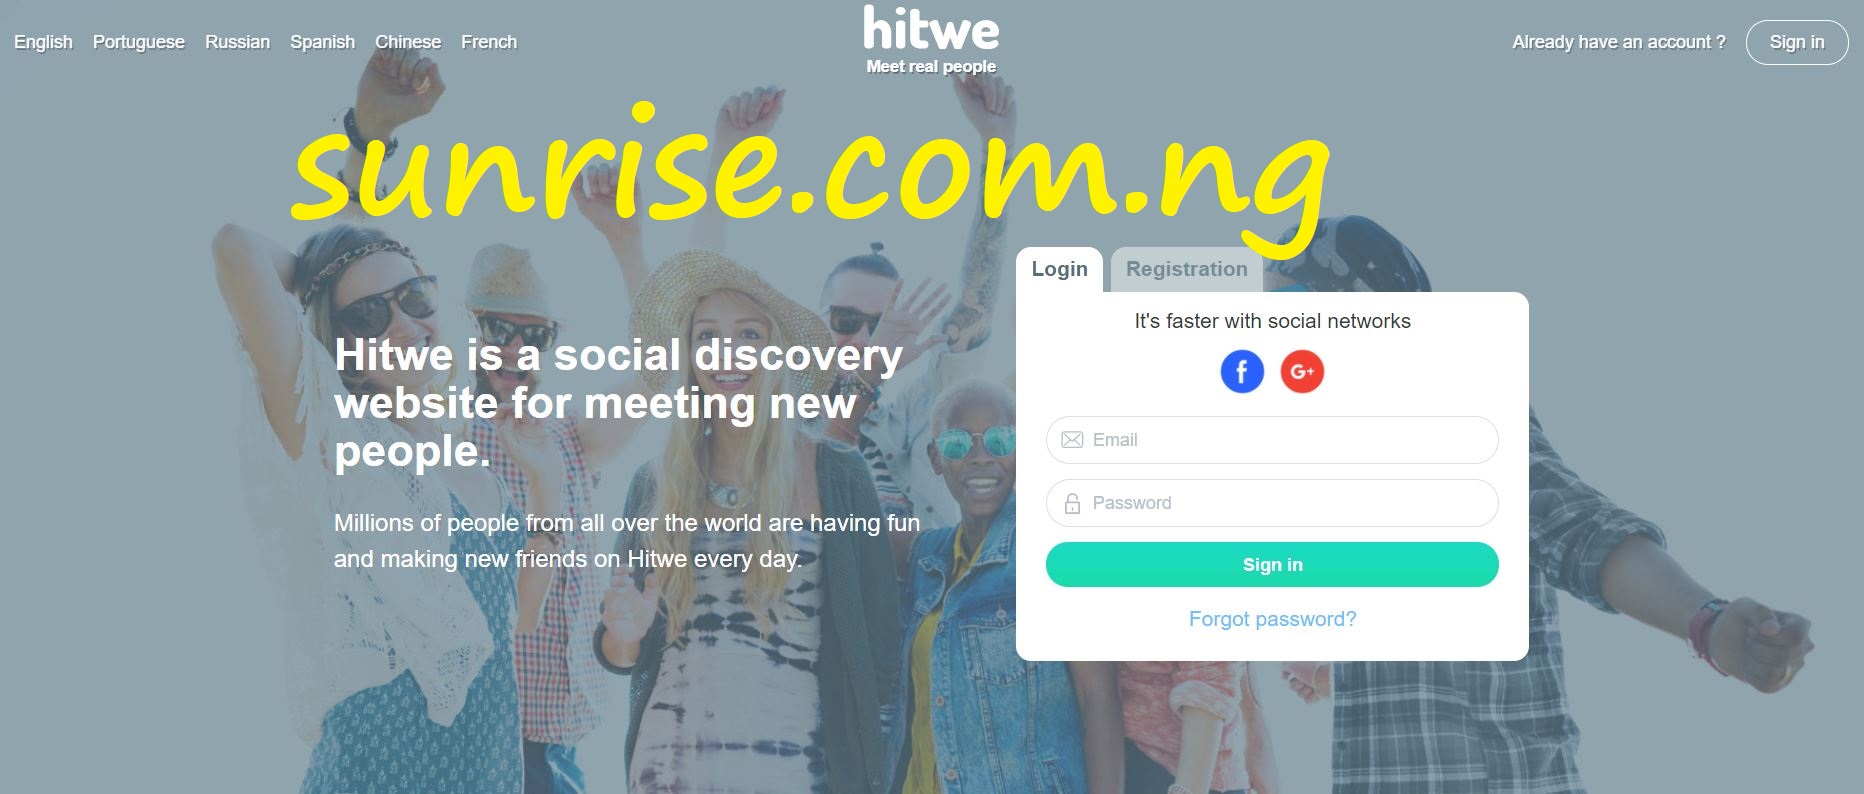 HitWe.com Sign Up